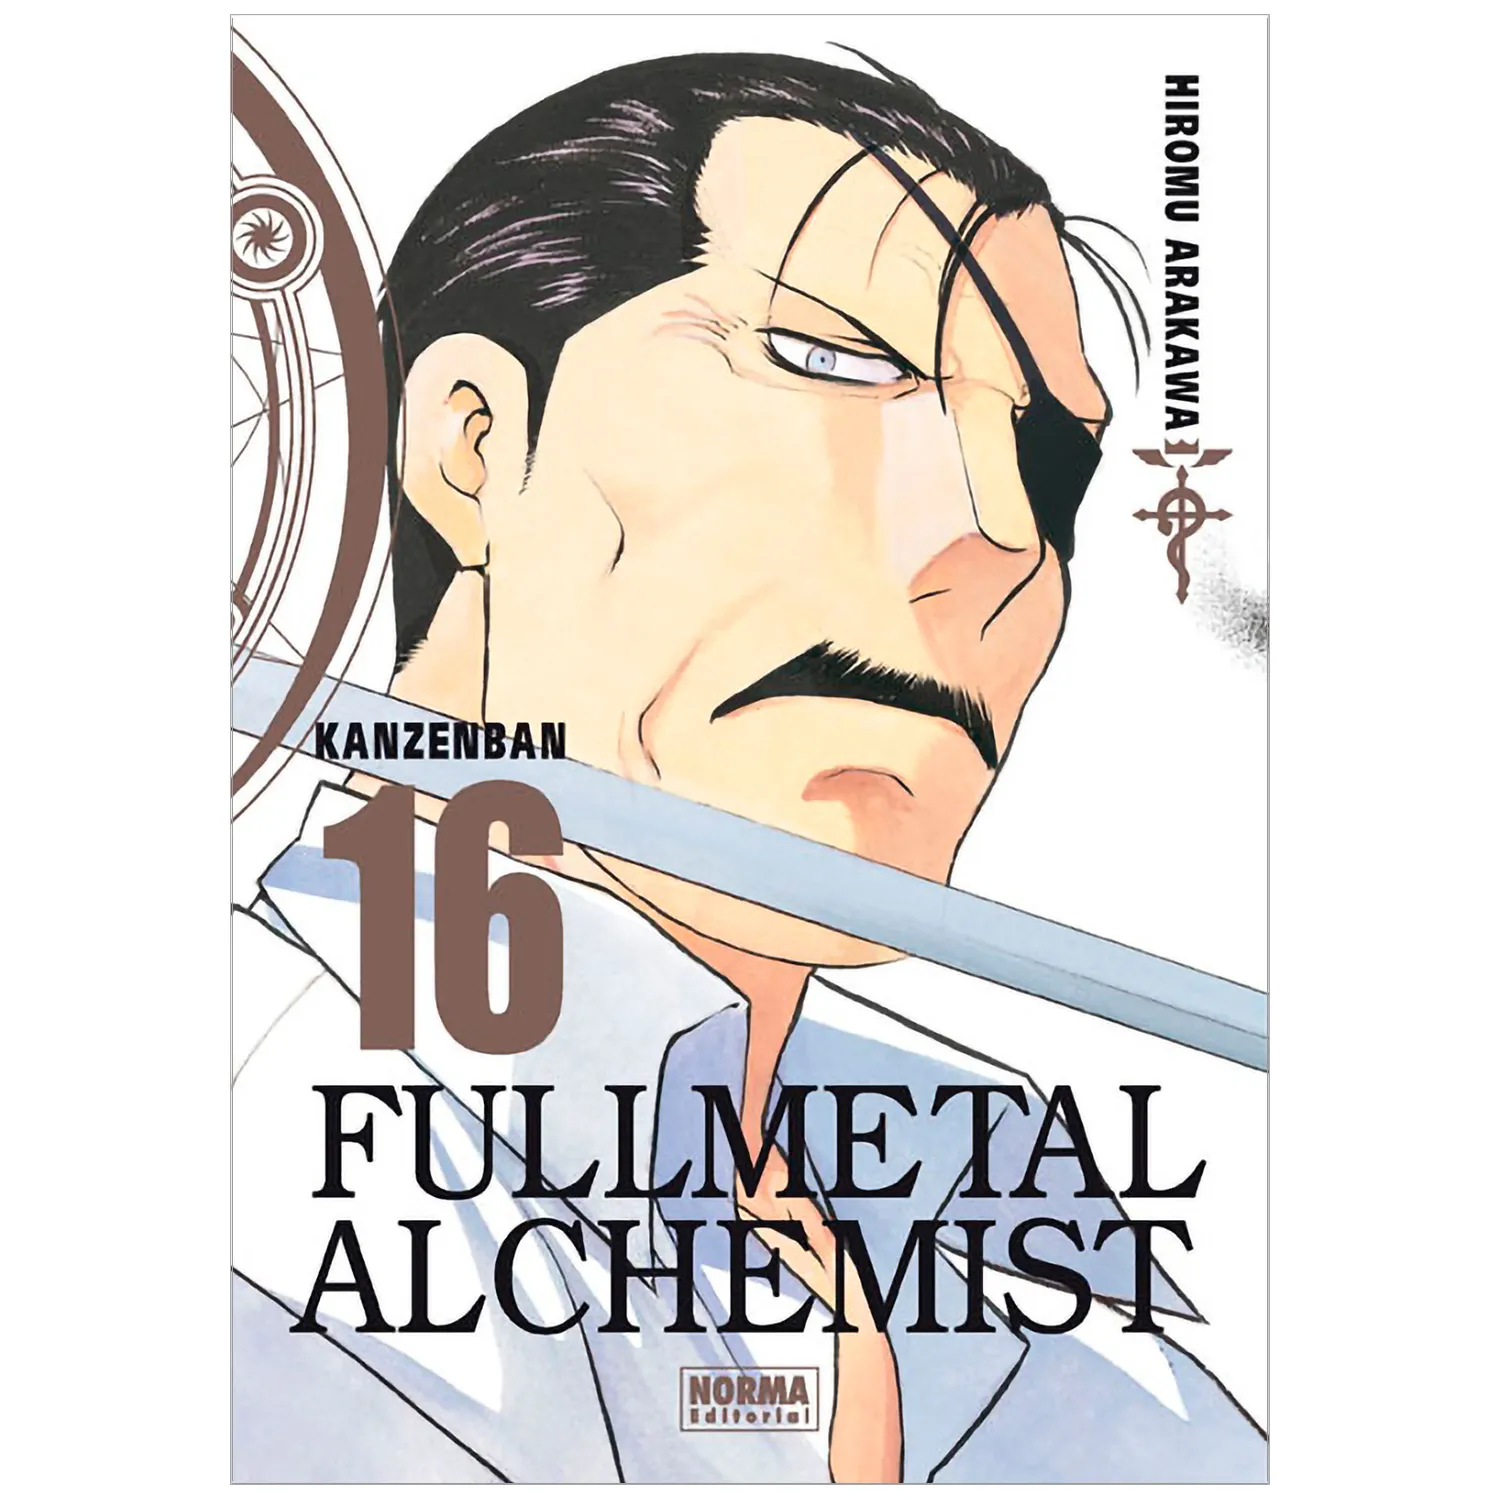 Fullmetal Alchemist Kanzenban No. 16